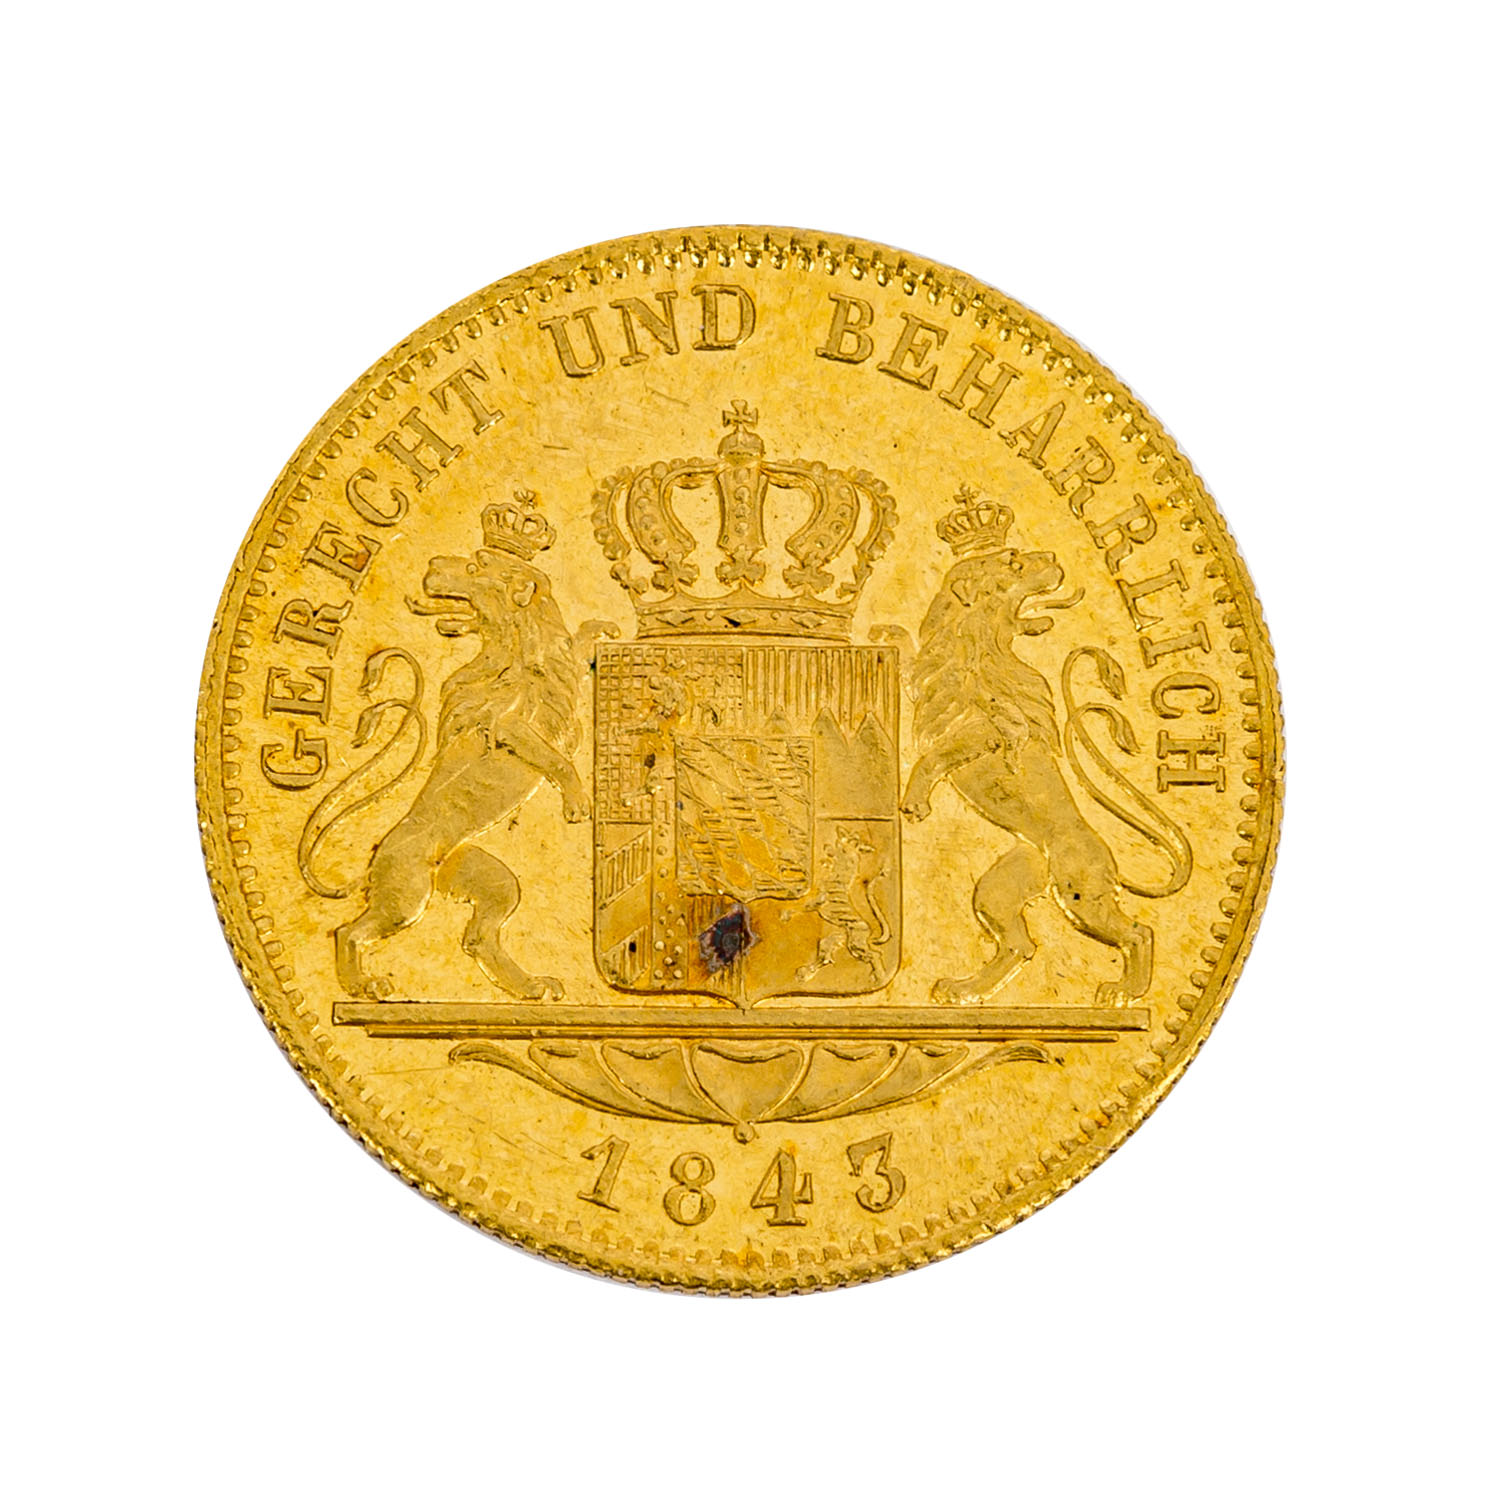 Königreich Bayern - Dukat 1843, König Ludwig I, München, 3,49 Gramm, Erhaltung: gut - Image 2 of 2